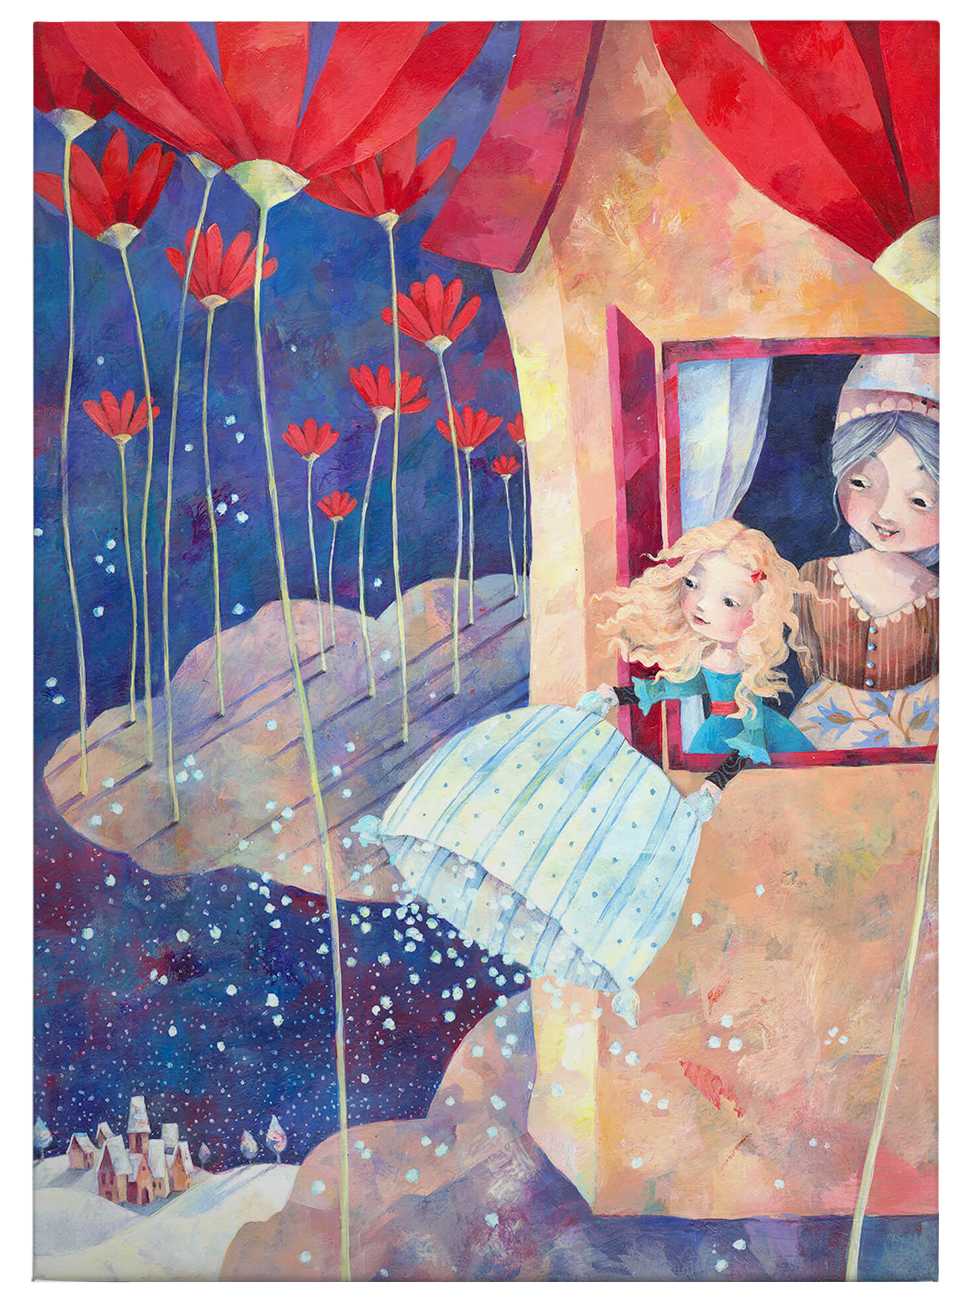             Quadro su tela Fairytale Frau Holle, di Blanz - 0,50 m x 0,70 m
        